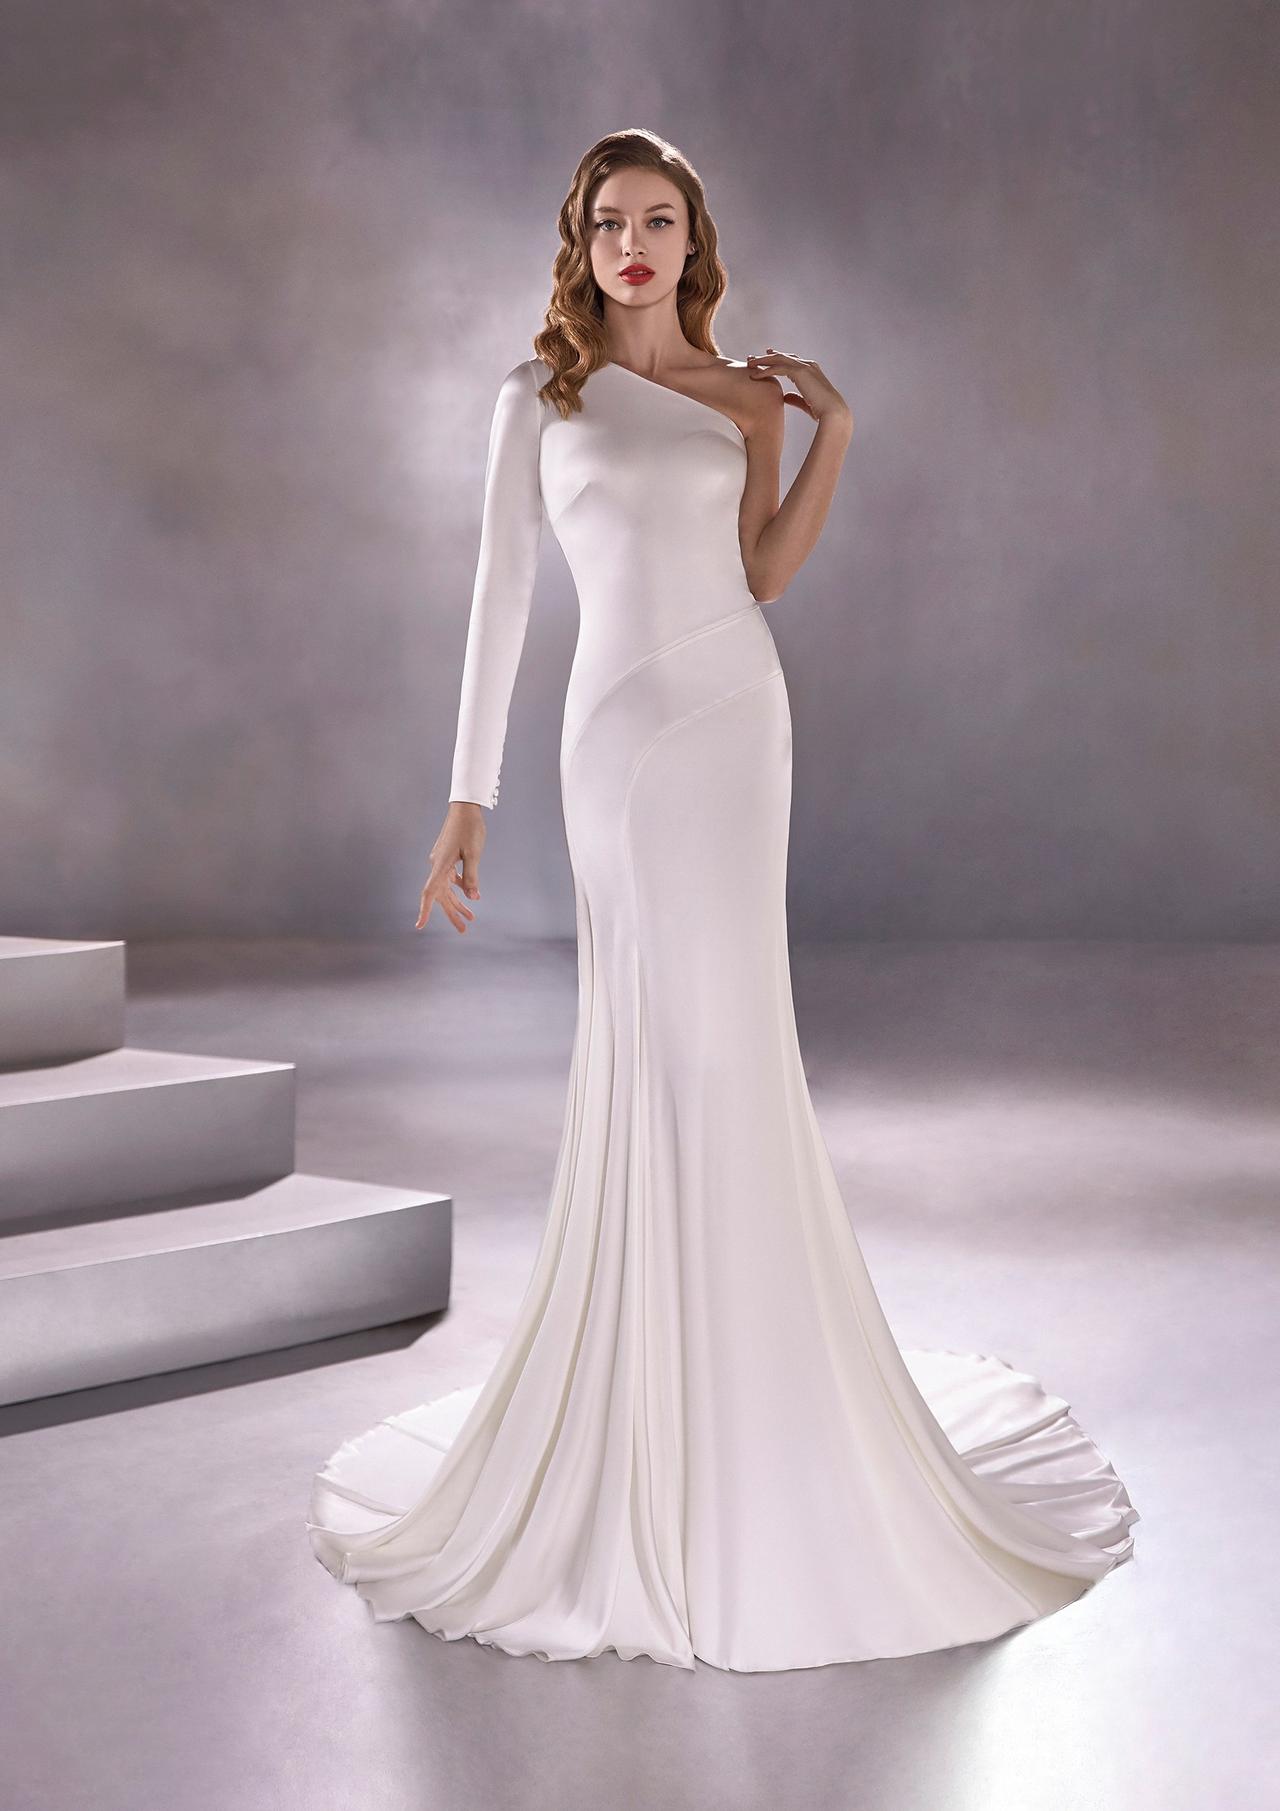 Vestidos de novia con escote asimétrico: 20 modelos